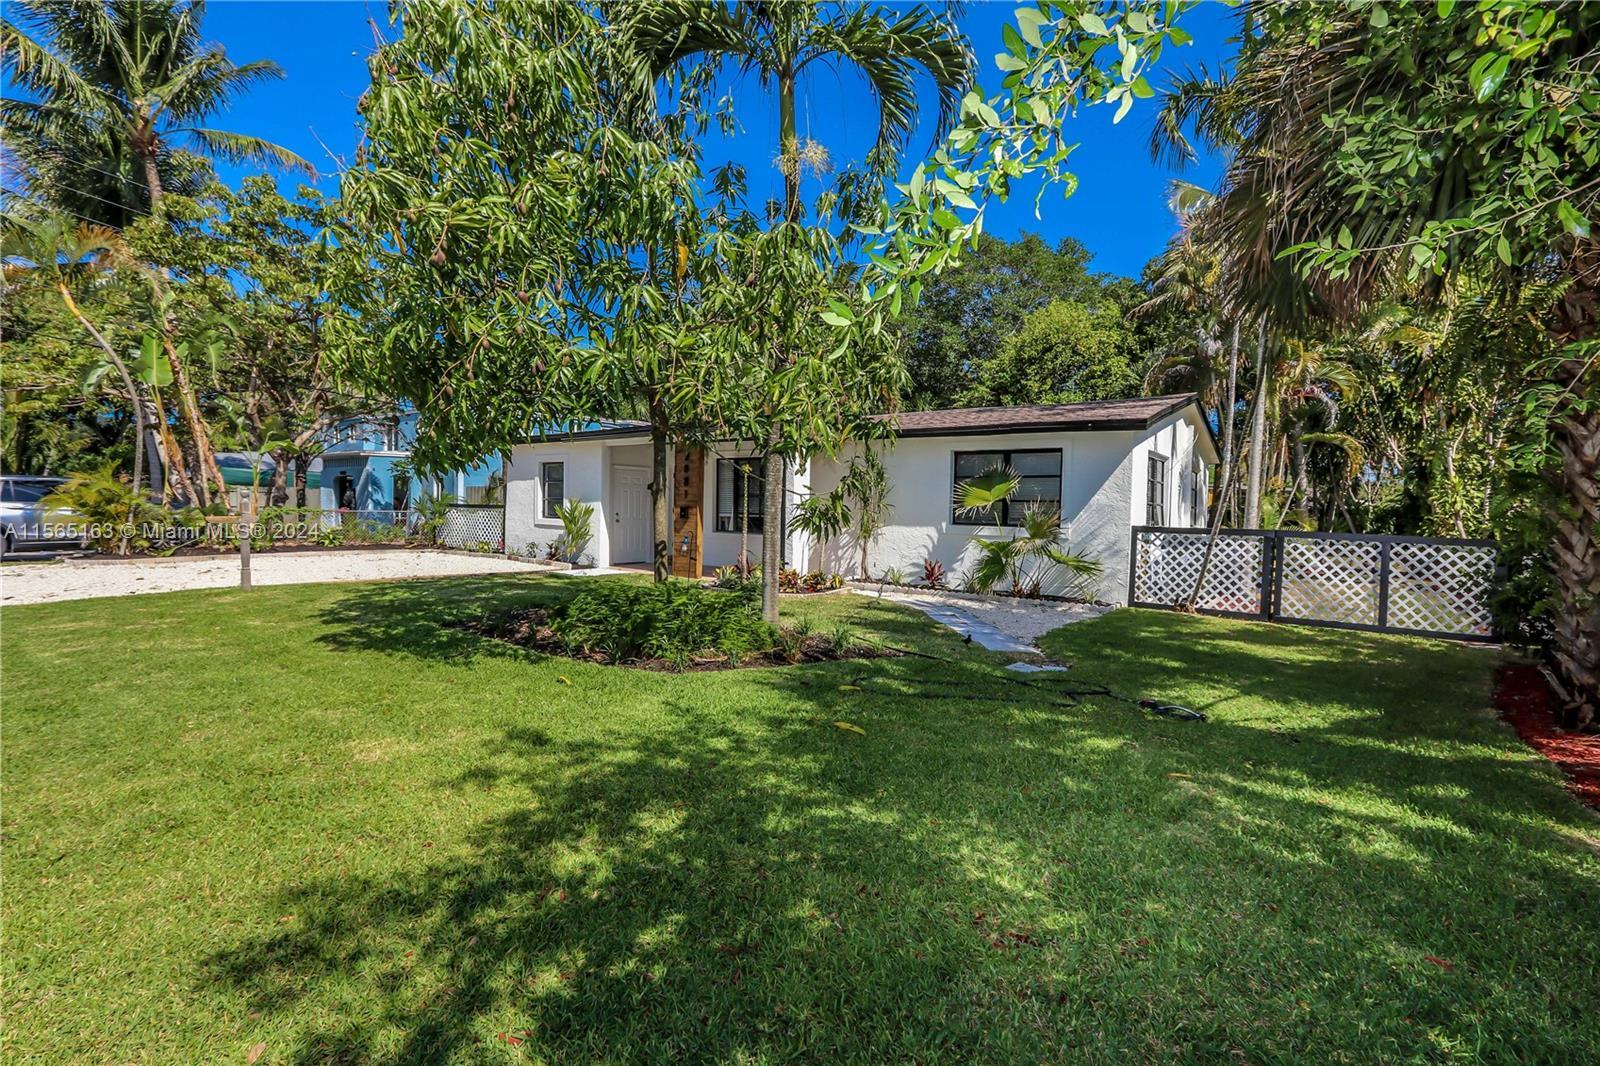 Amazing 3/2 home in trendy Chula Vista. Fenced tropical yard, nearly 9,000 SF, has
30 trees, dbl ga